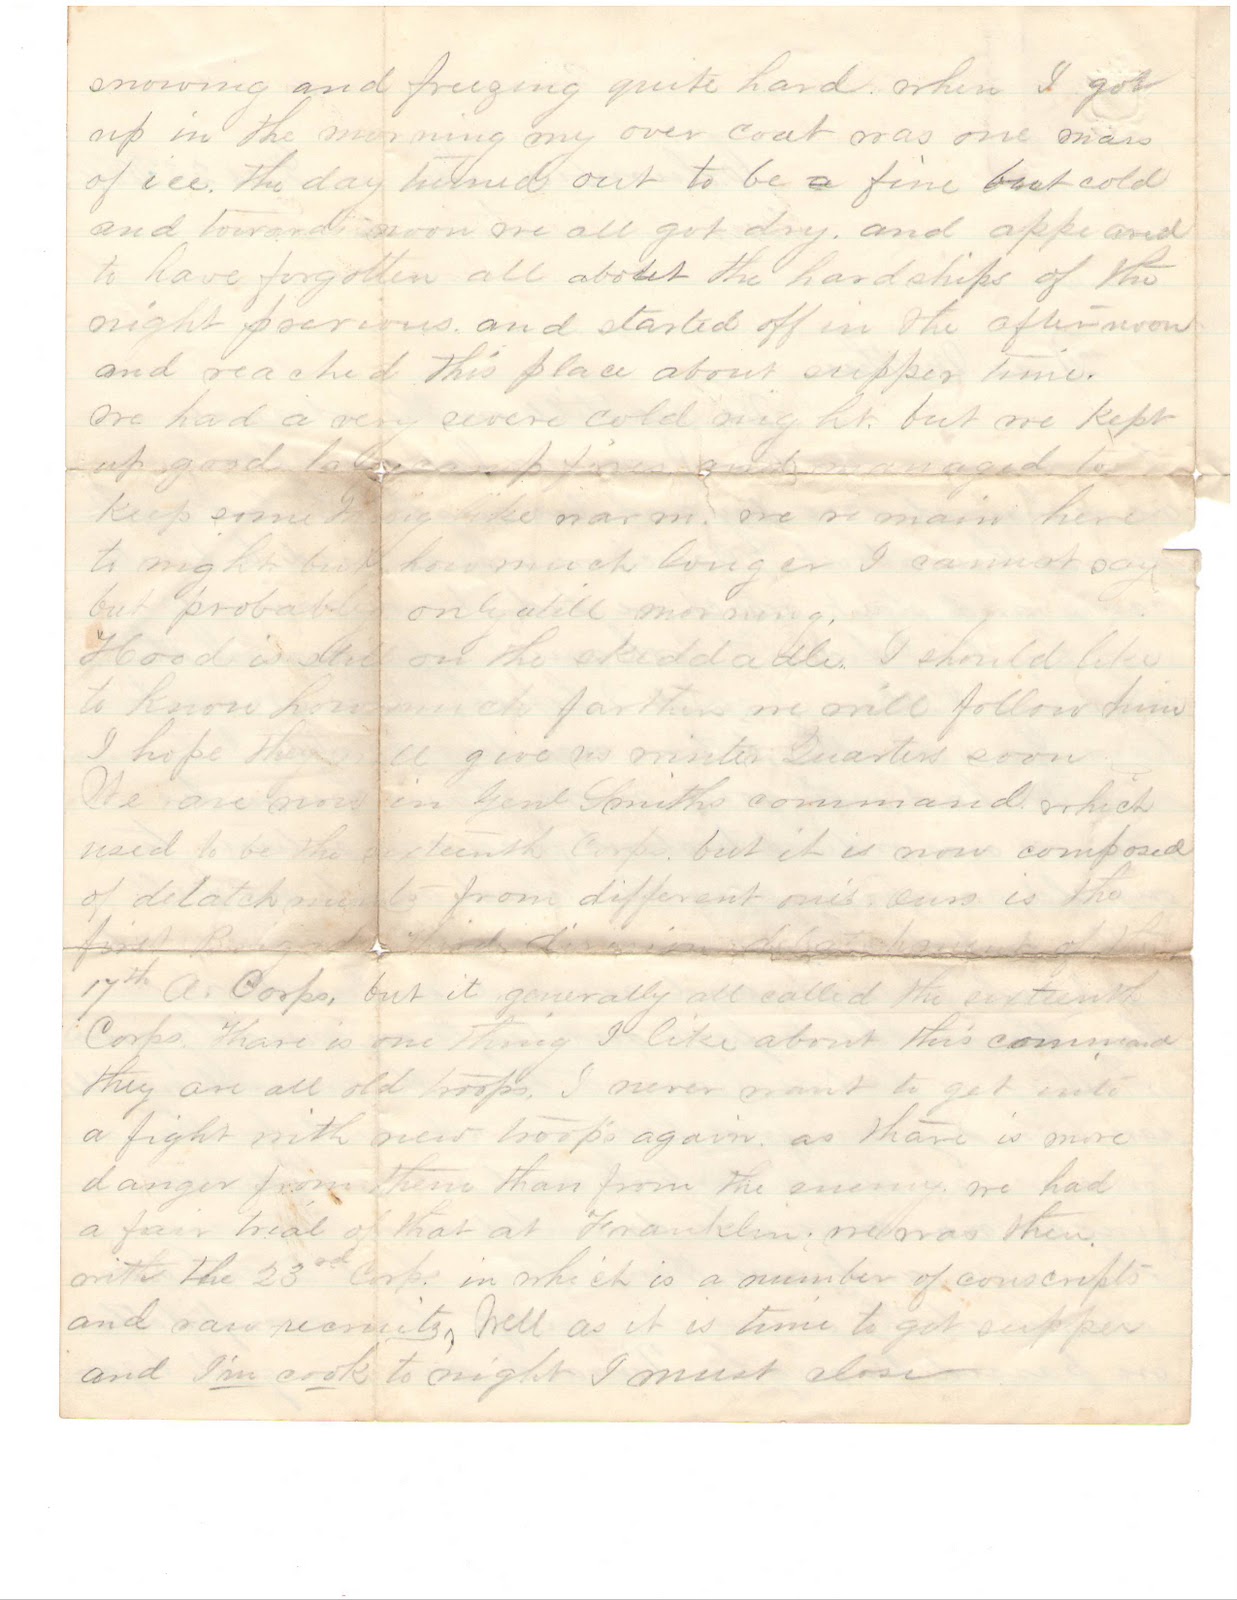 Edward G. Stevens' Civil War Letters: December 23, 1864